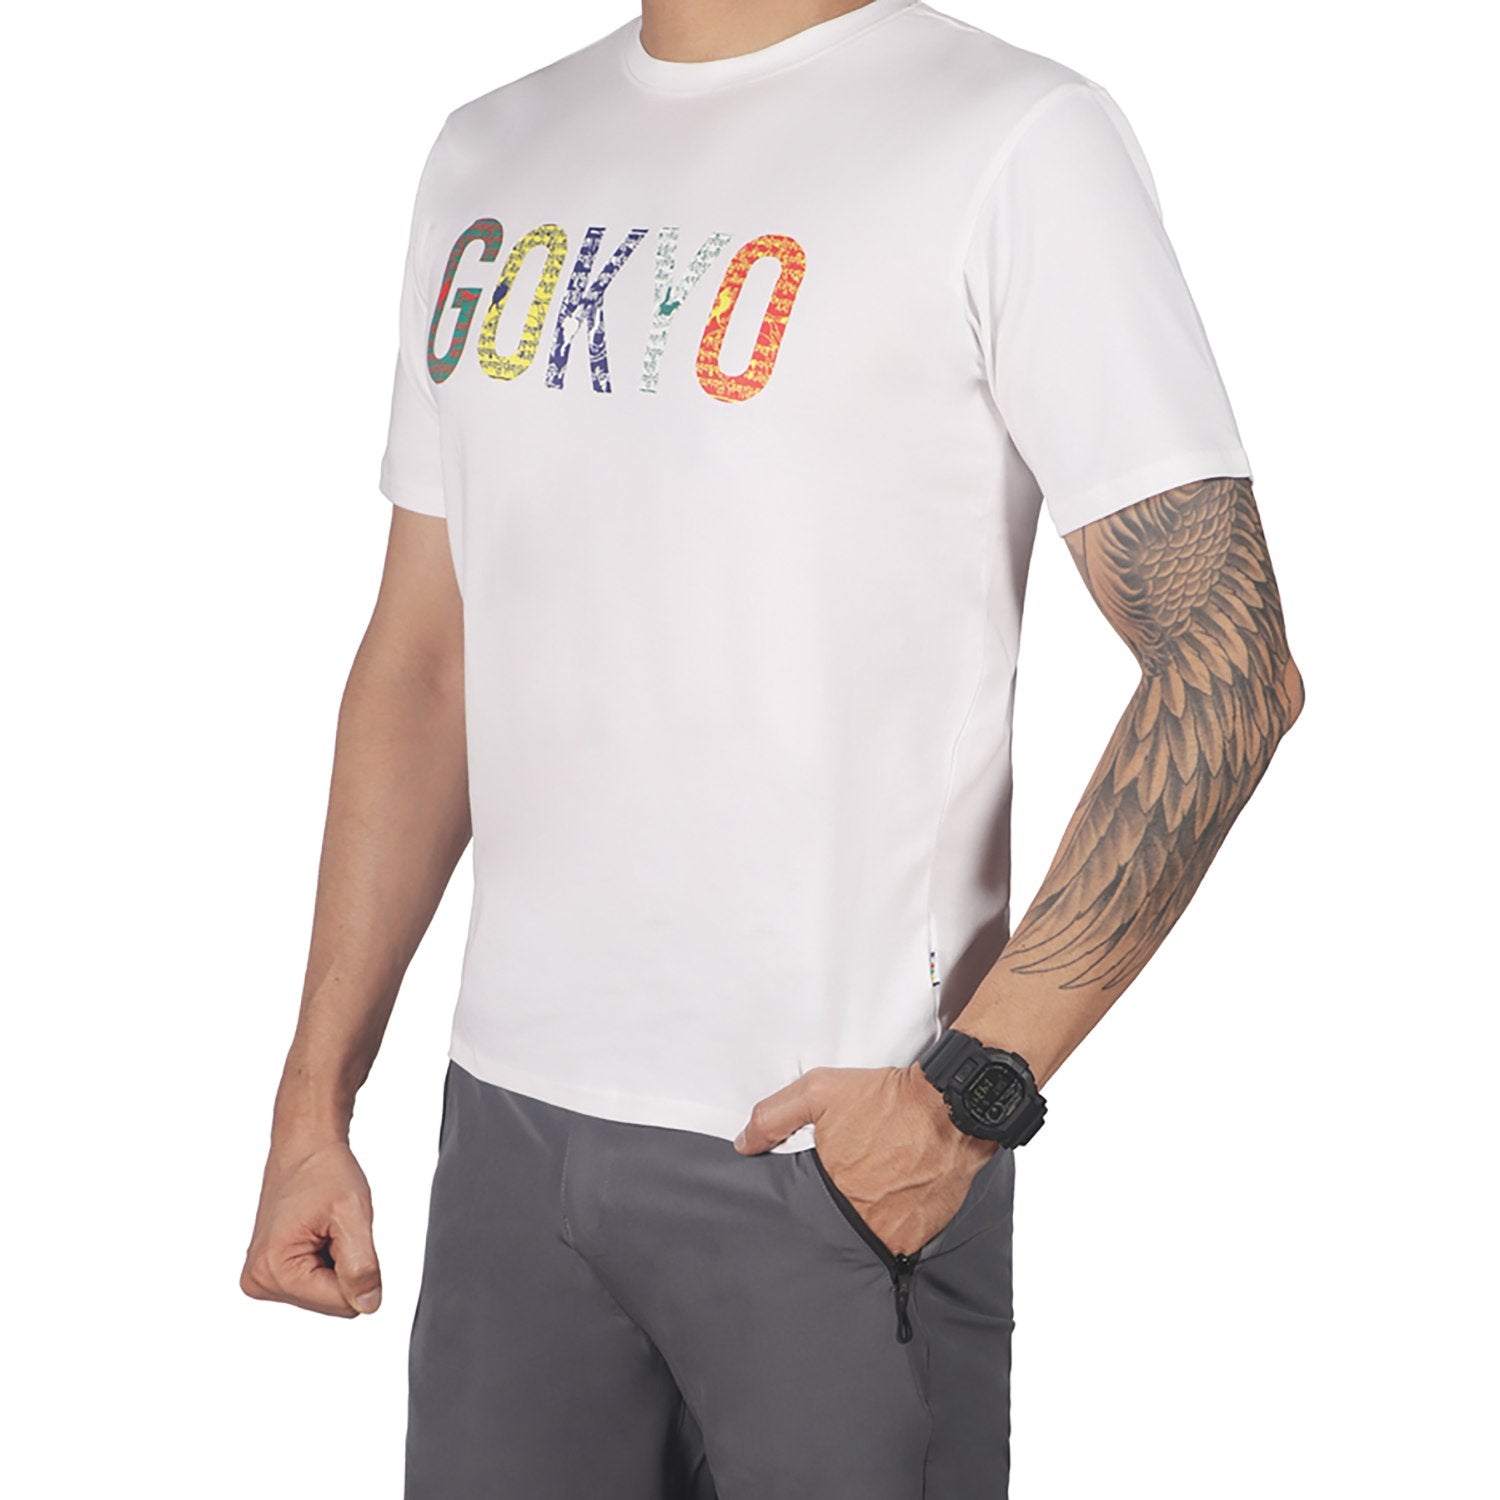 Buy Gokyo GOKYO Originals Tshirt - Flag | Trekking & Hiking T-shirts at Gokyo Outdoor Clothing & Gear